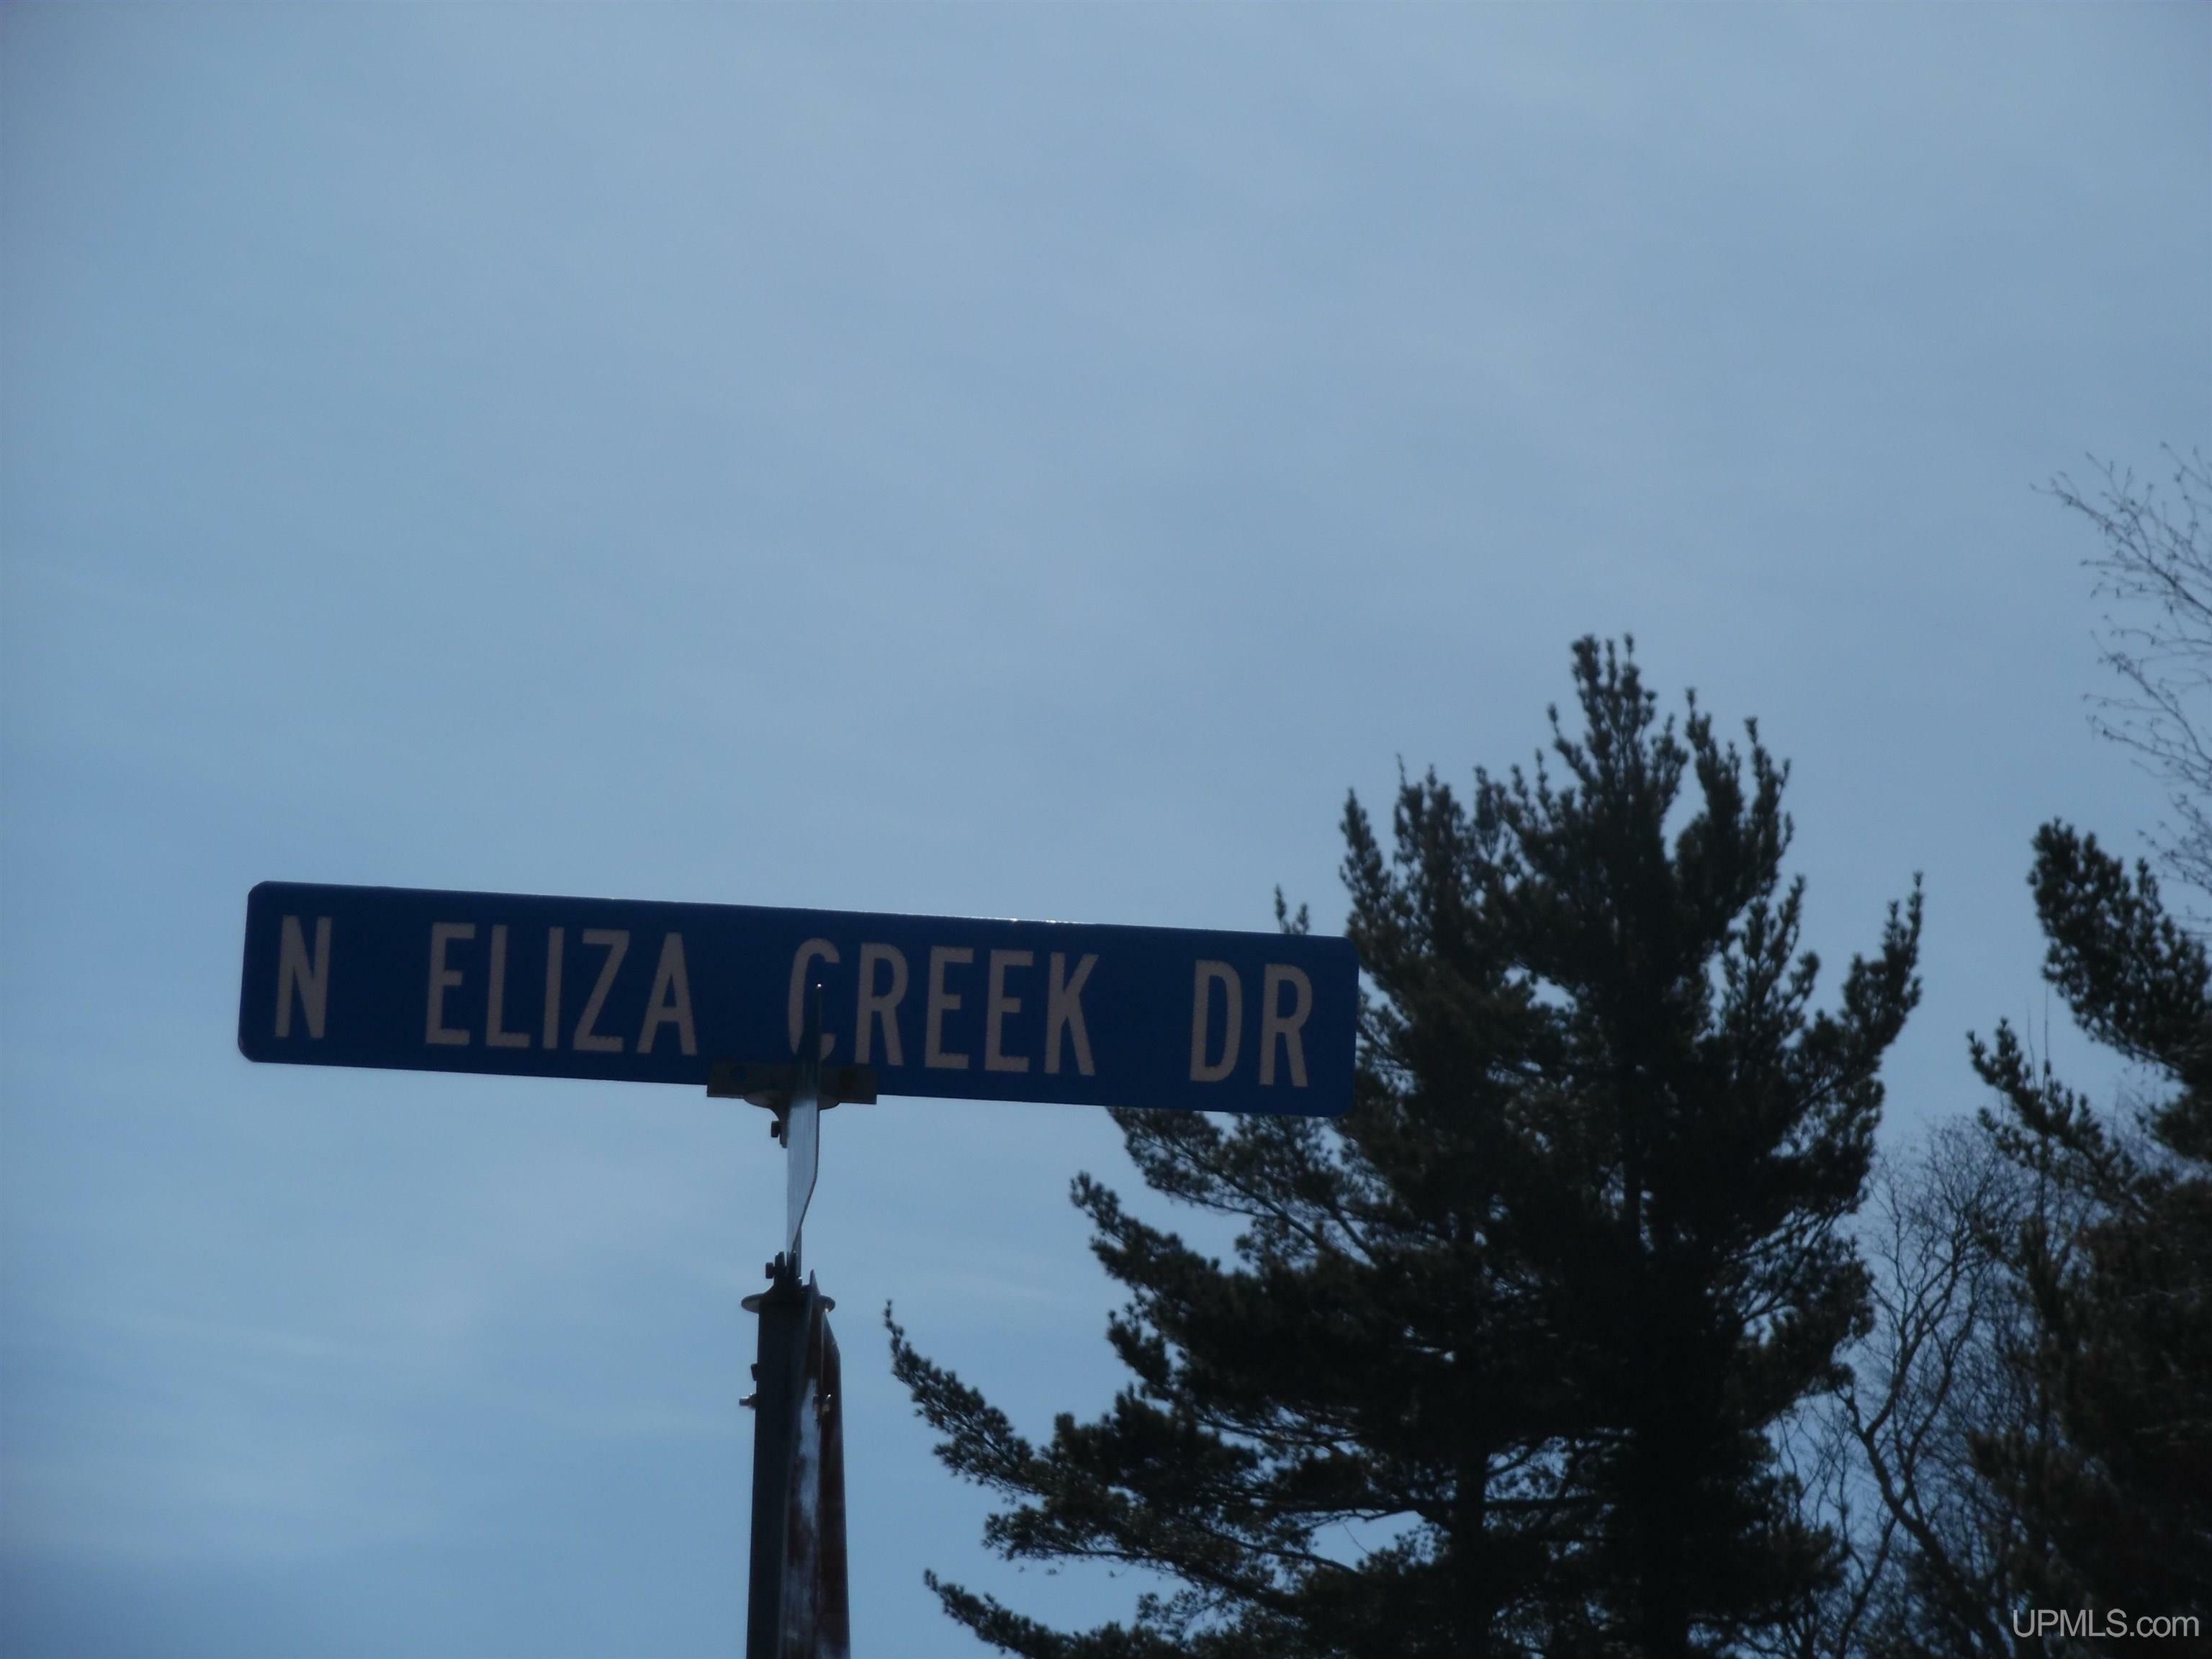 Tbd Lot 36 Eliza Creek  Eagle Harbor MI 49950 photo